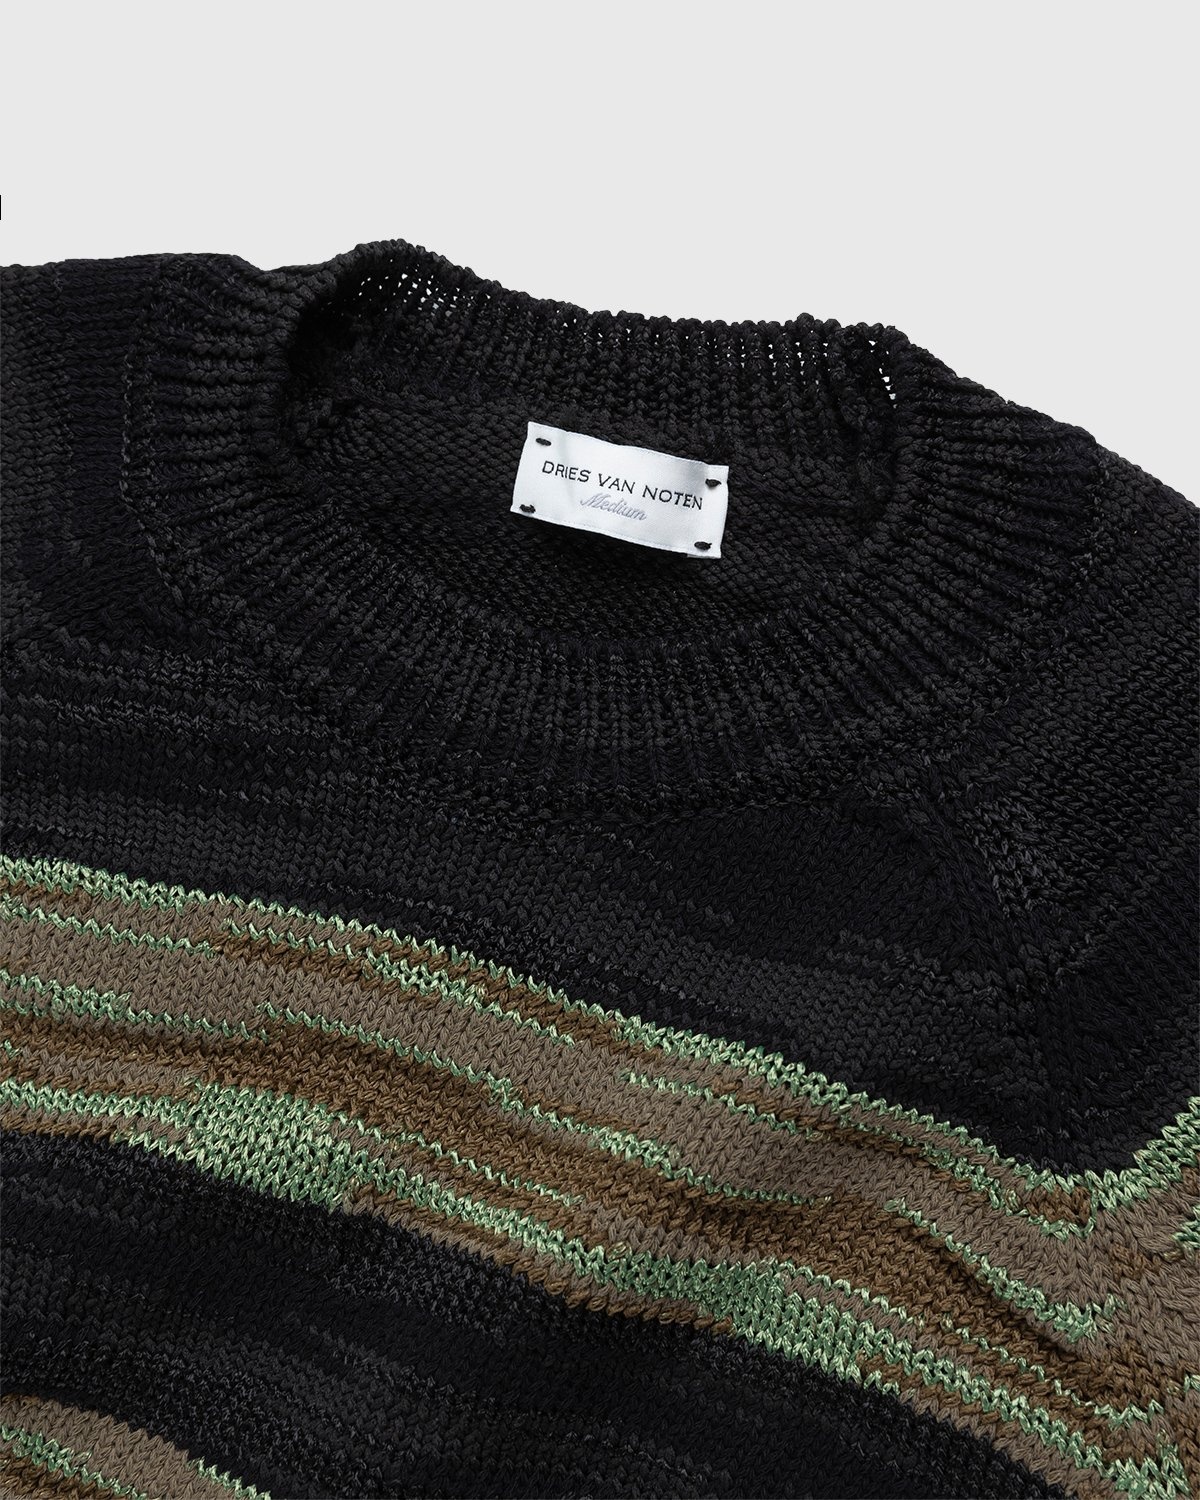 Dries van Noten – Janitor Intarsia Knit Sweater Black - Crewnecks - Black - Image 5